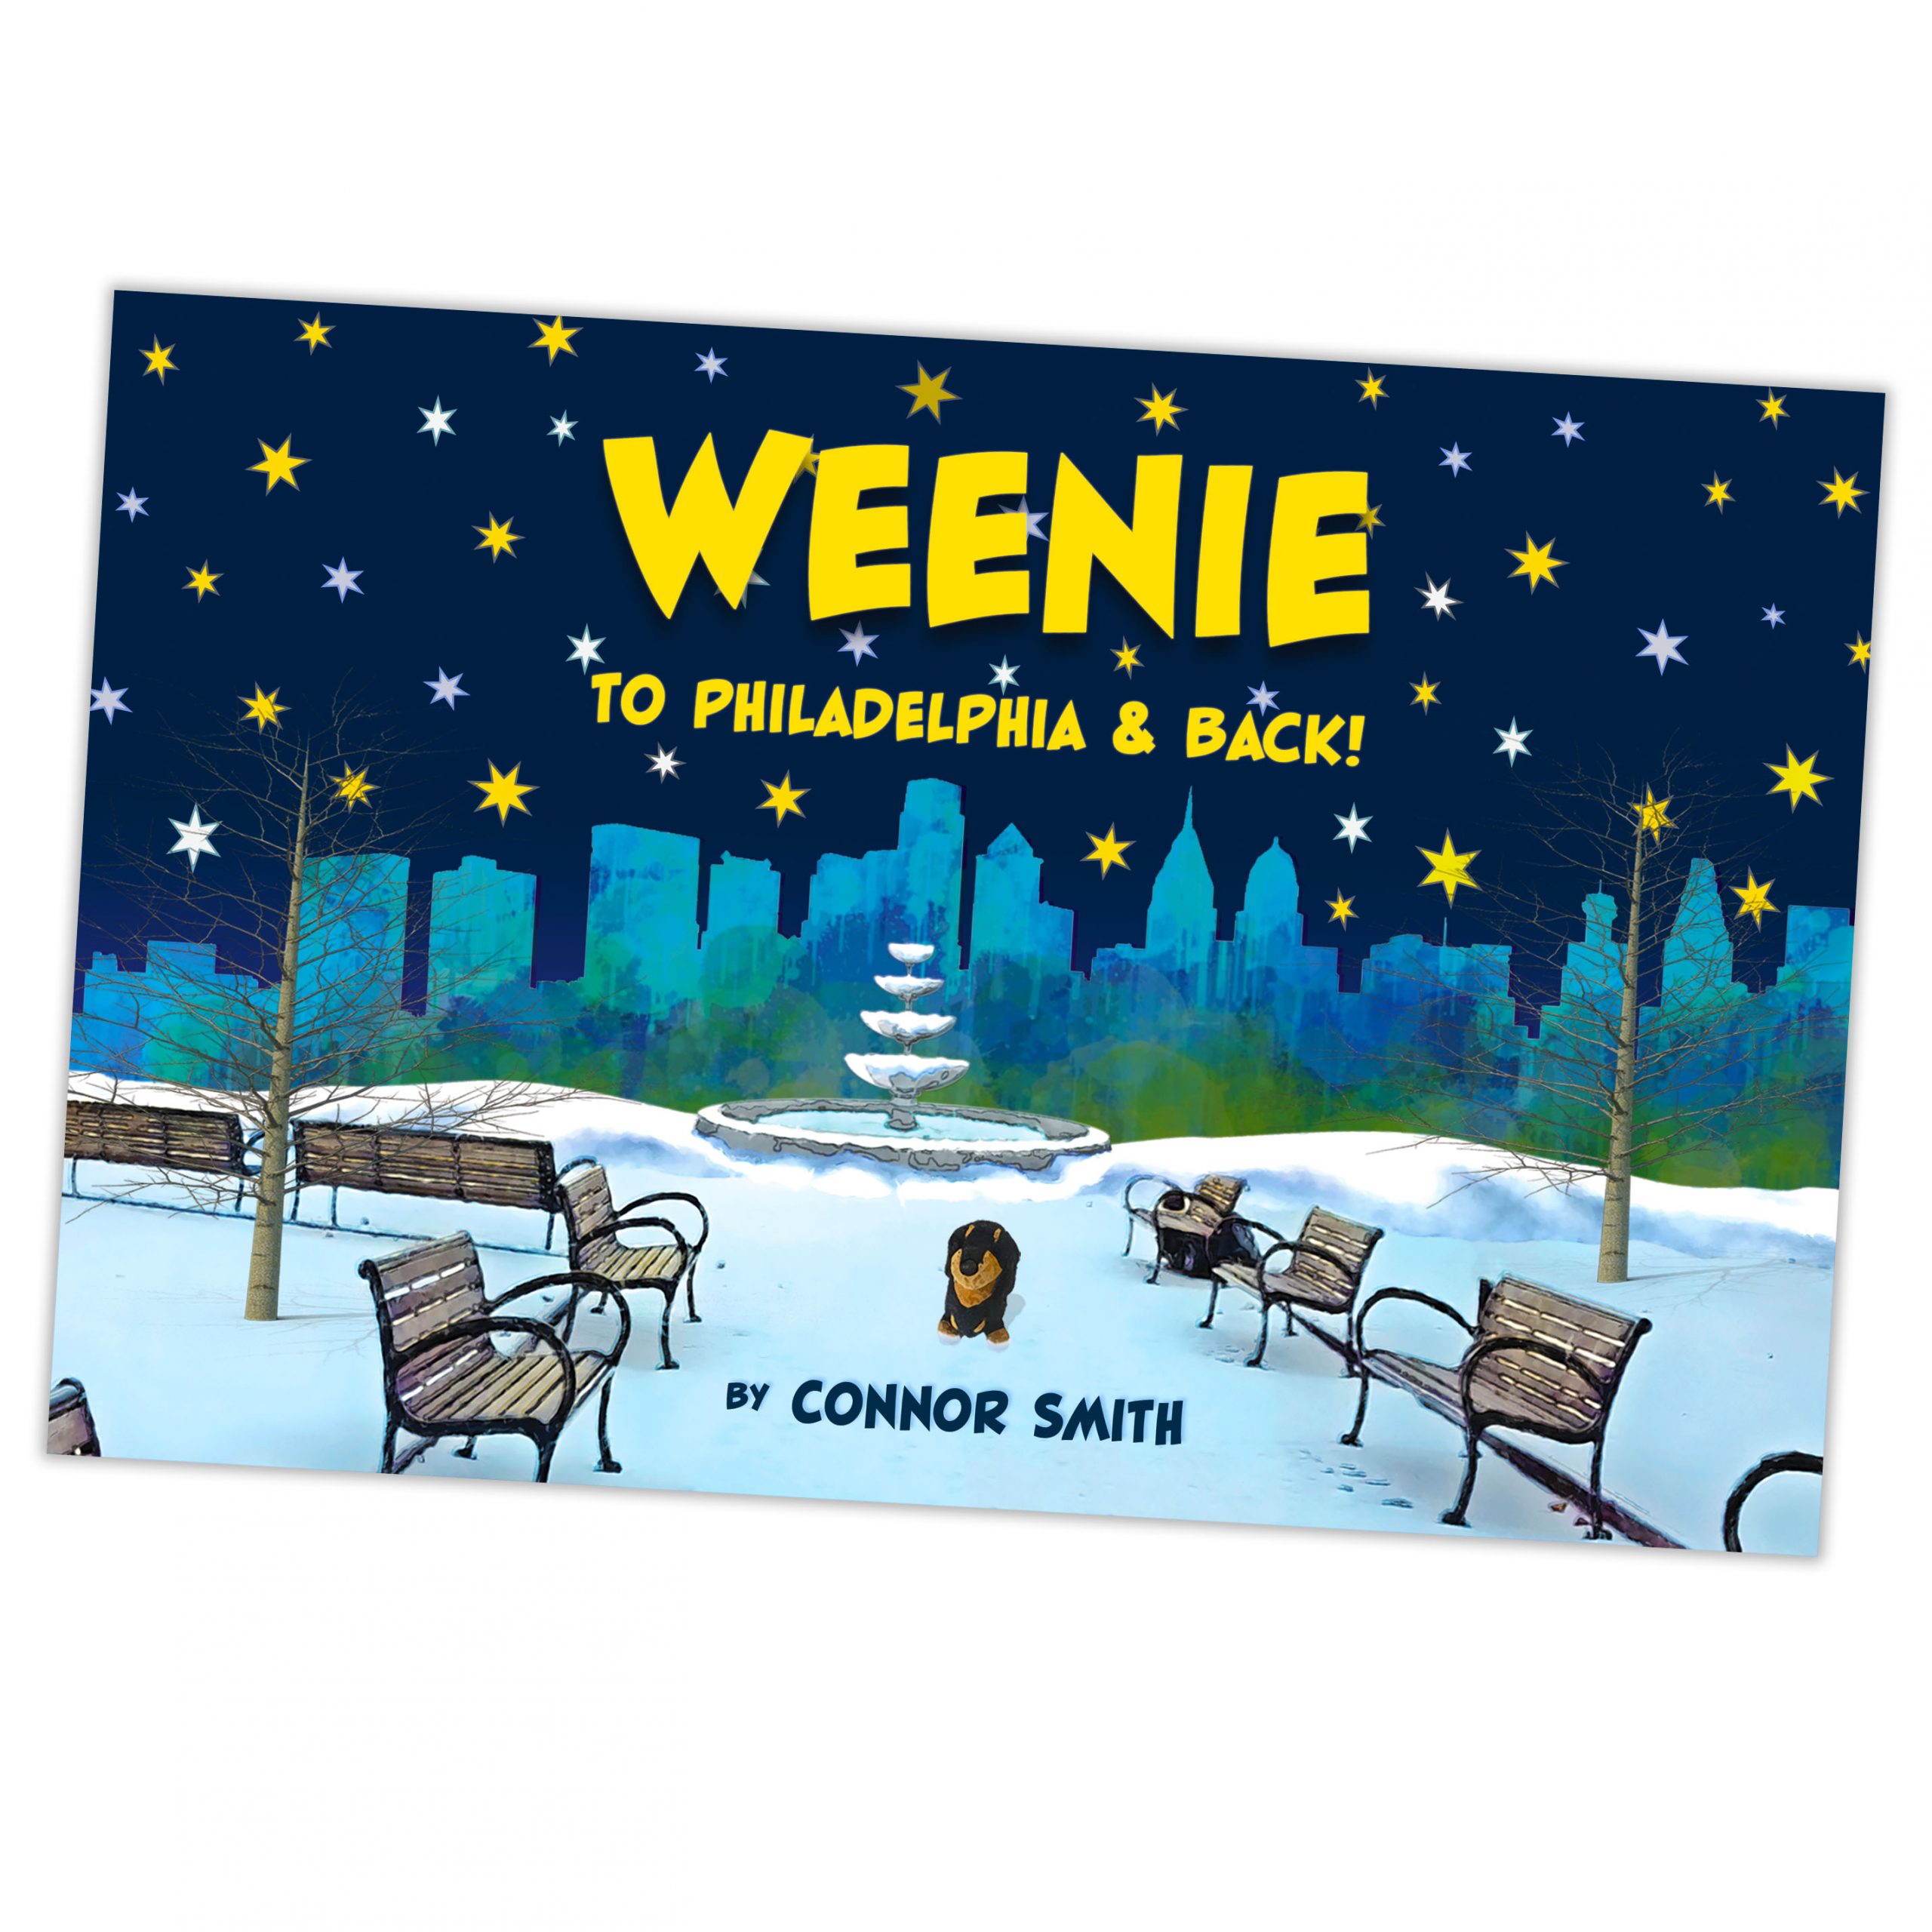 "Weenie, to Philadelphia & Back" by Connor Smith